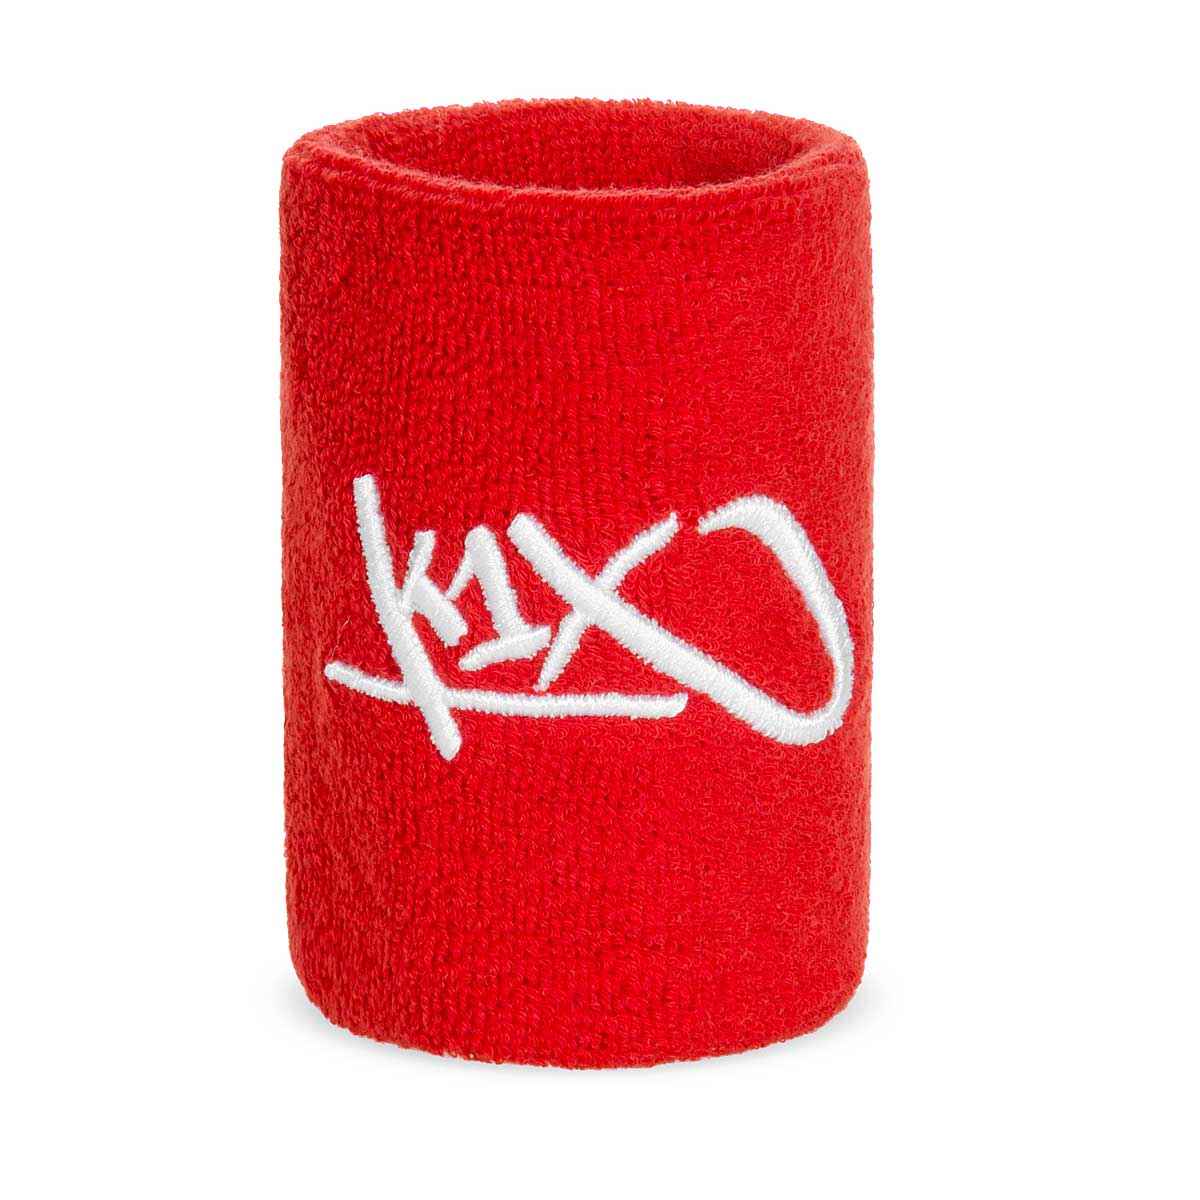 K1X Hardwood Wristbands, Red